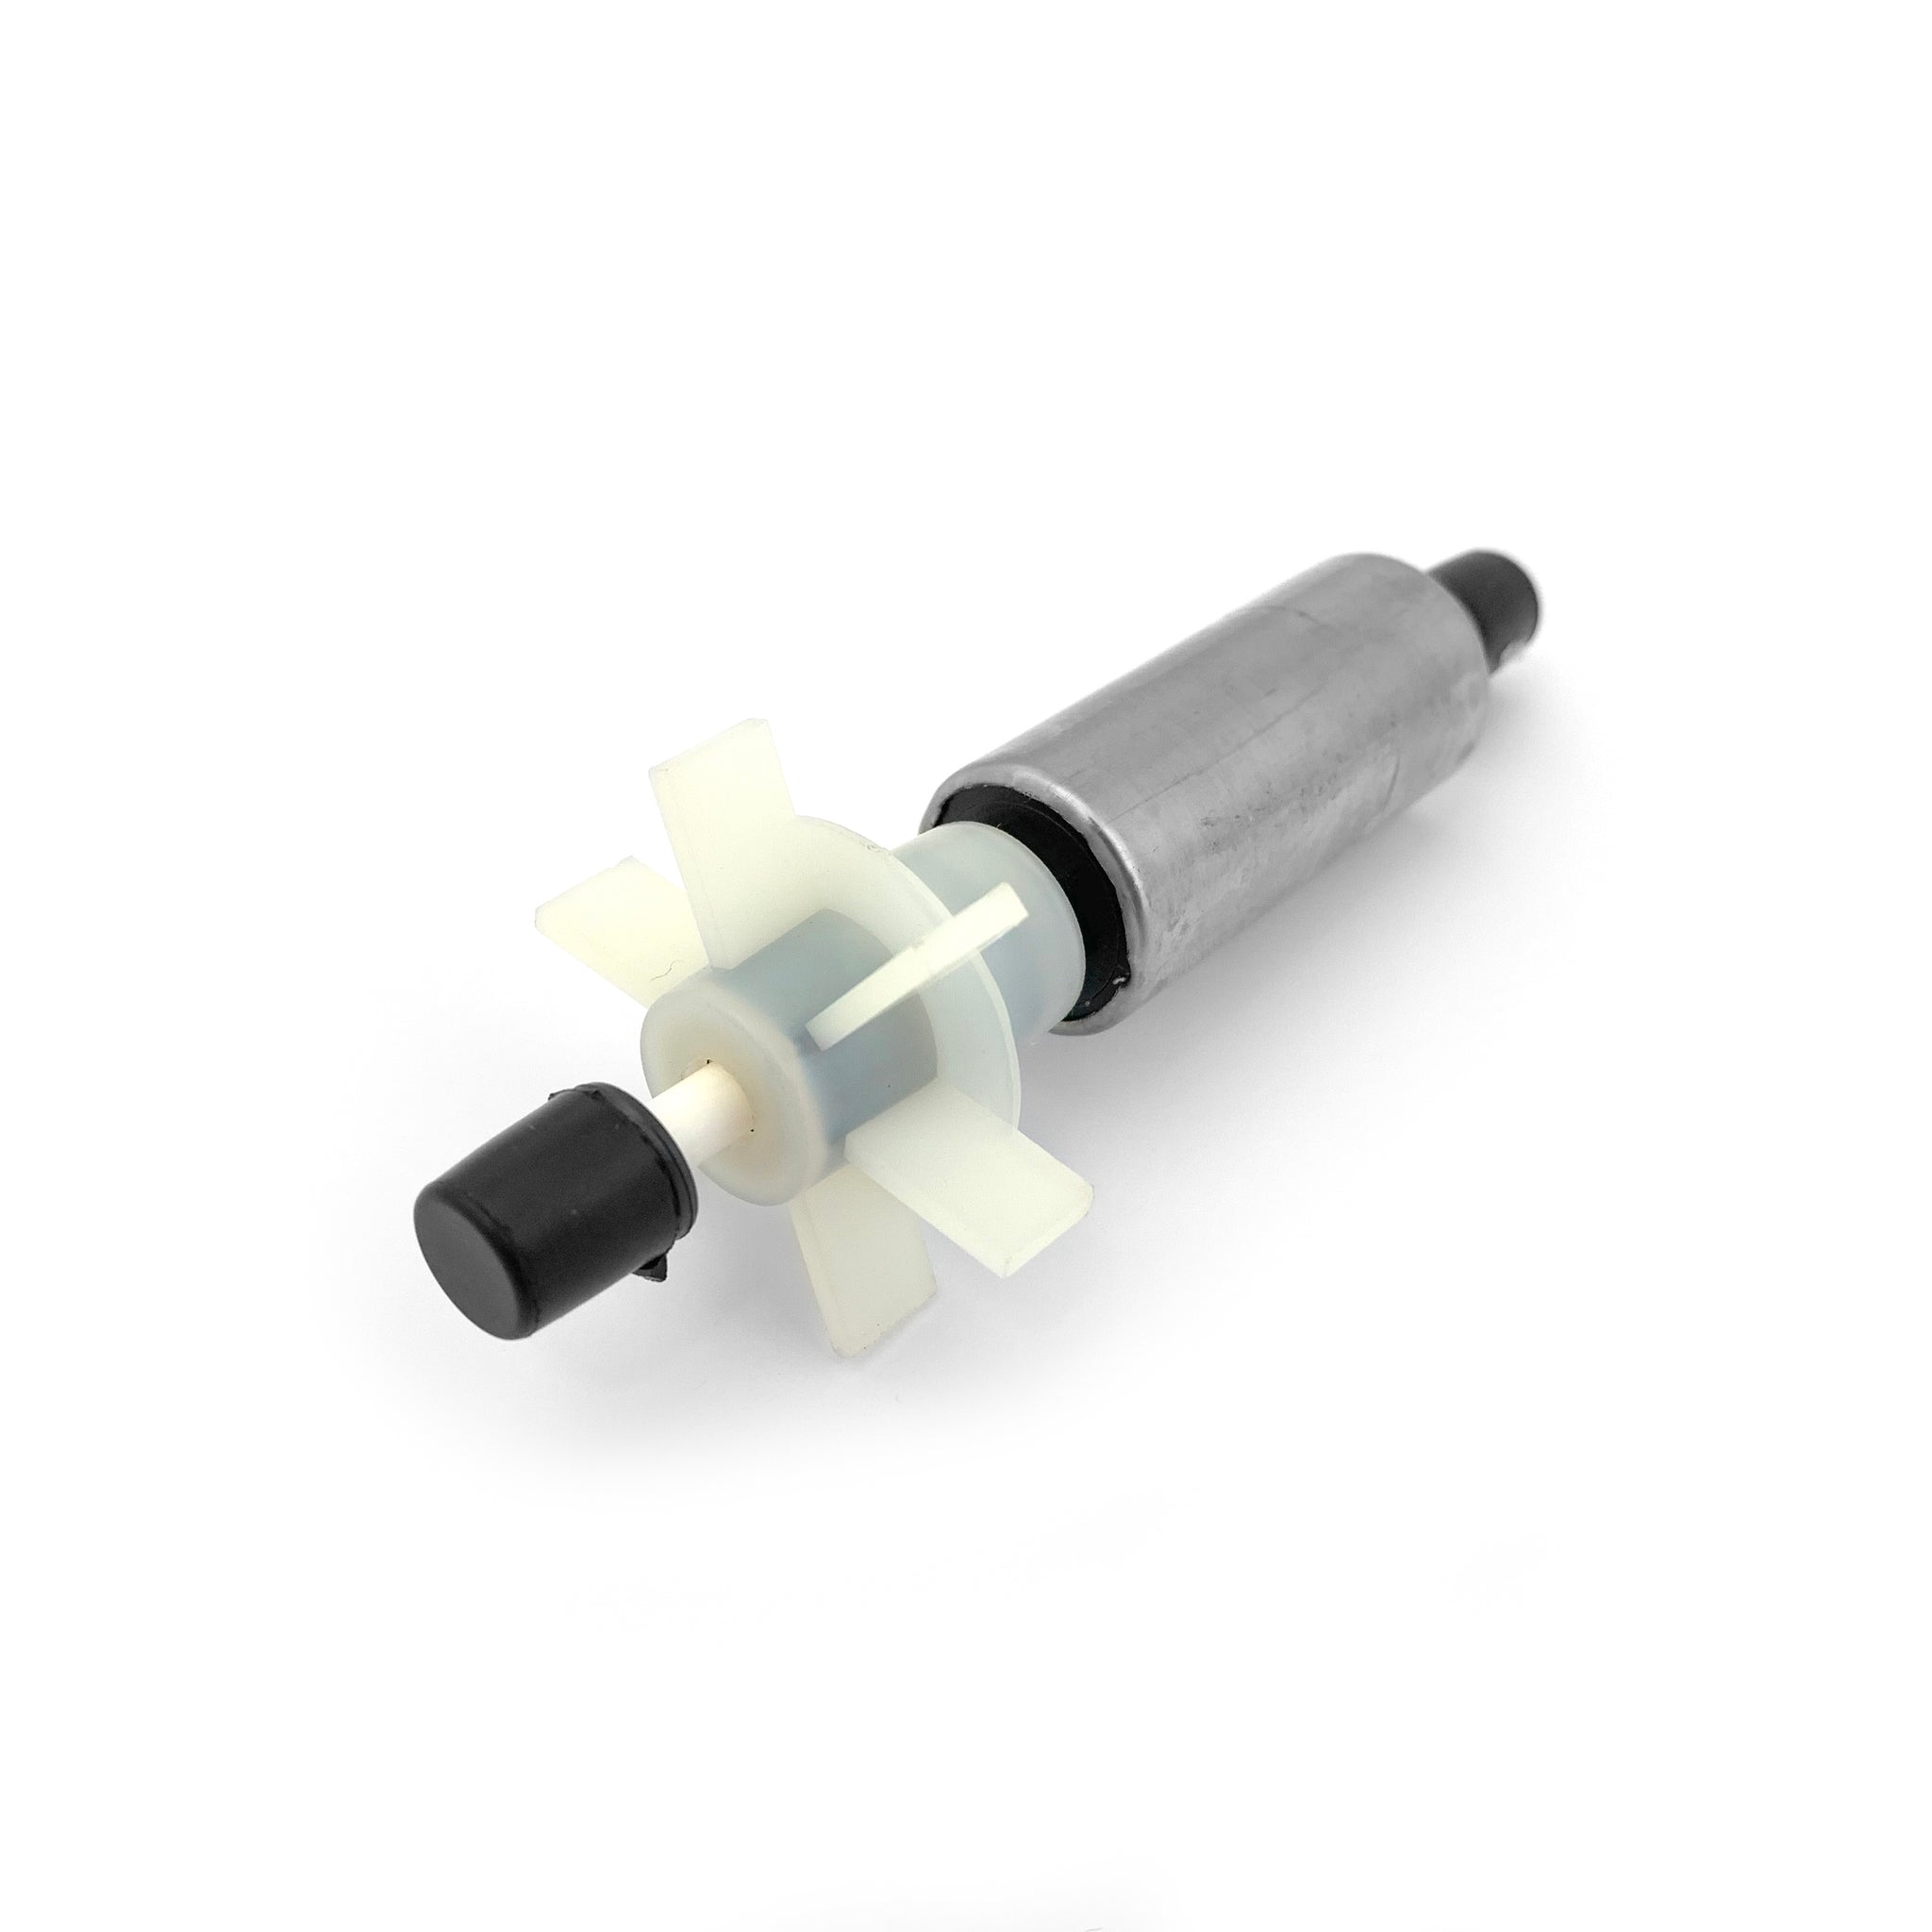 Replacement Impeller for HWGK / Pondmaster ECO 1000 GPH Pump